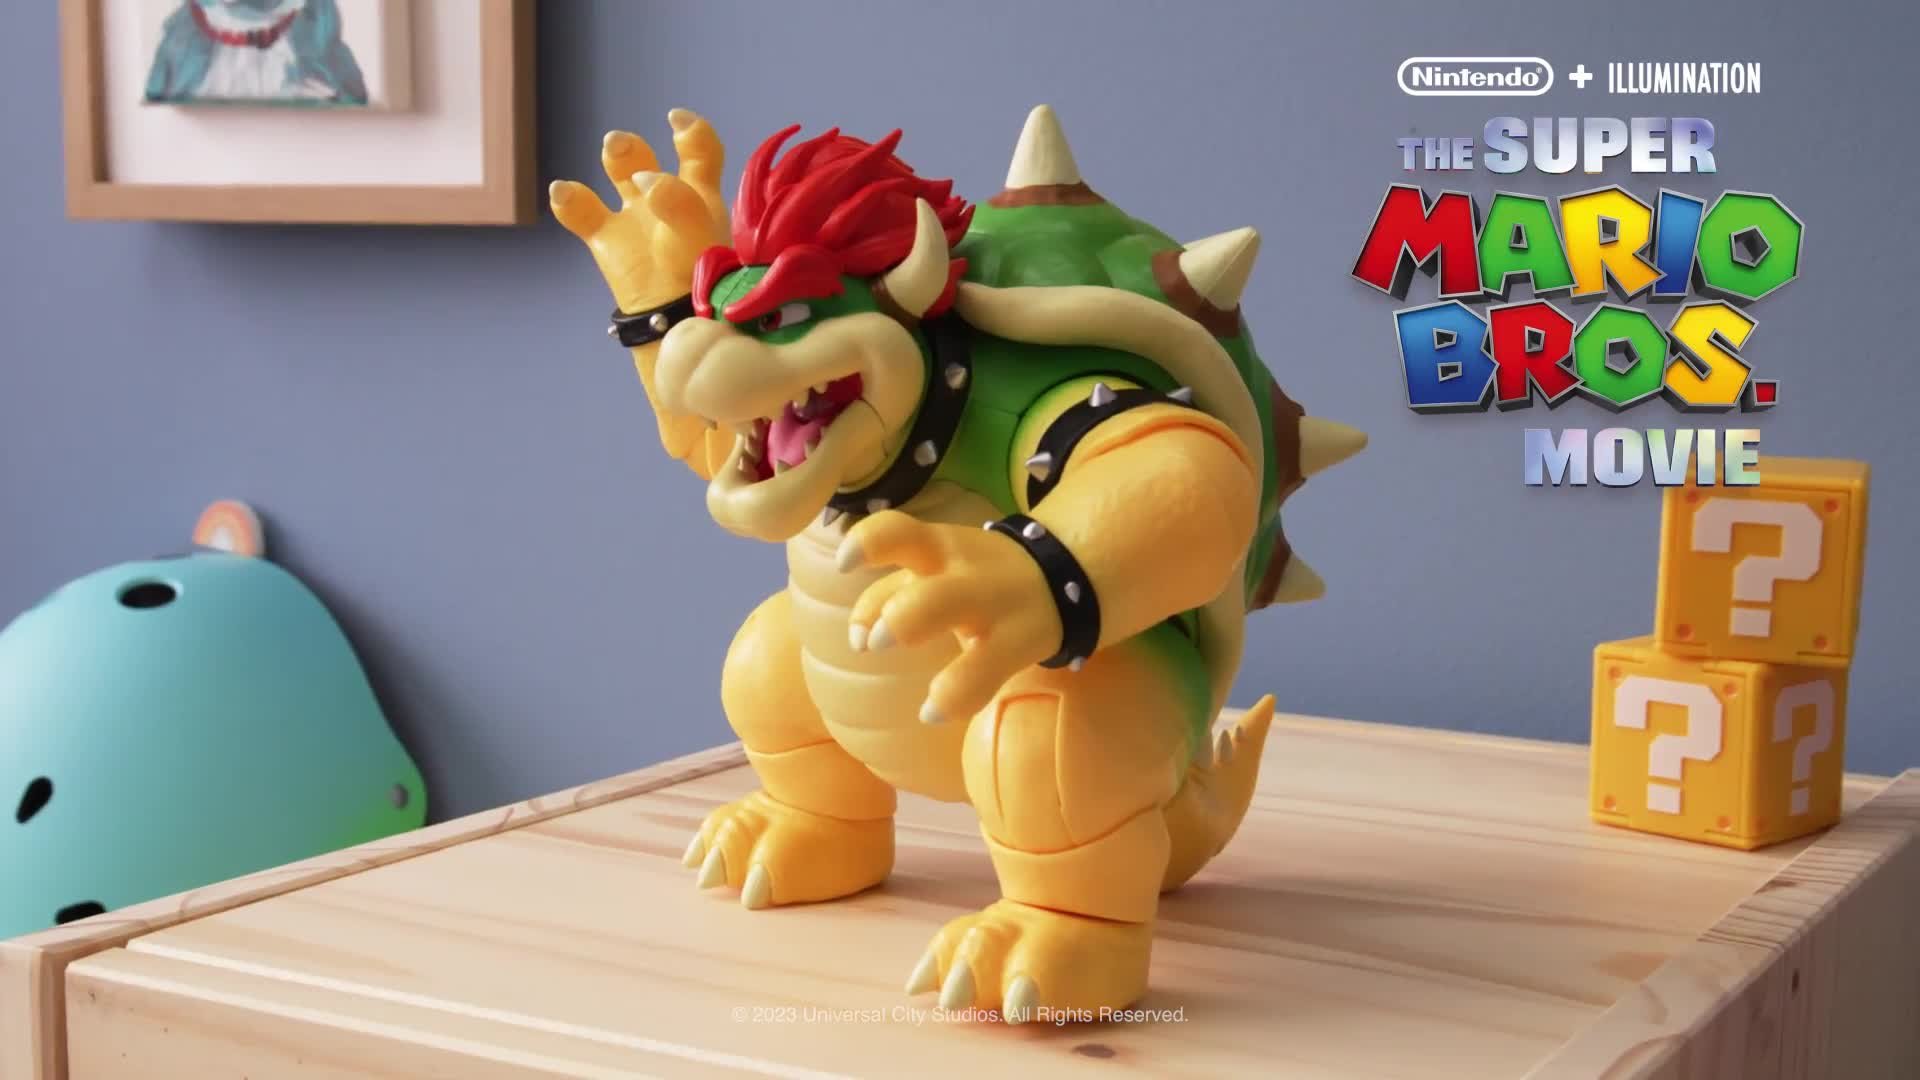 Super Mario Movie - Bowser (Fire Breathing Effect) - figurine